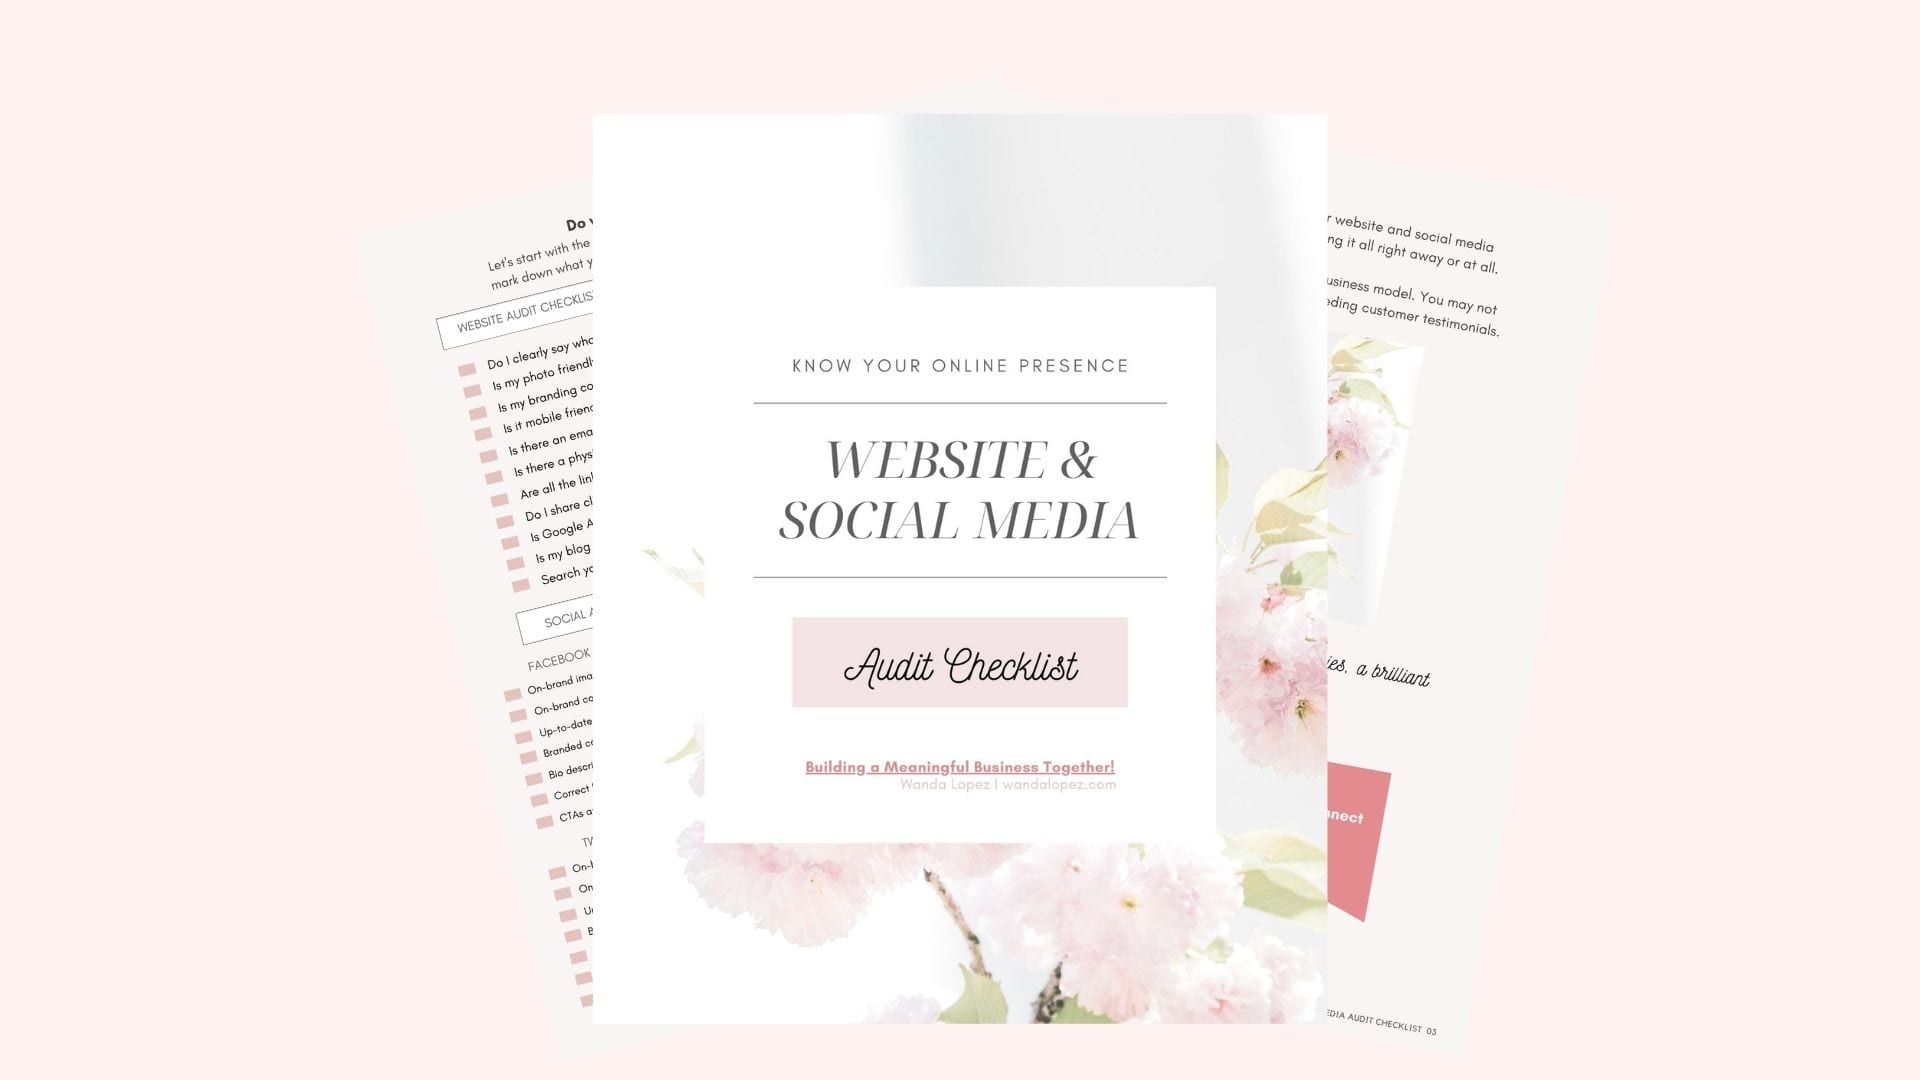 Website and Social Media Audit Checklist by Wanda Lopez